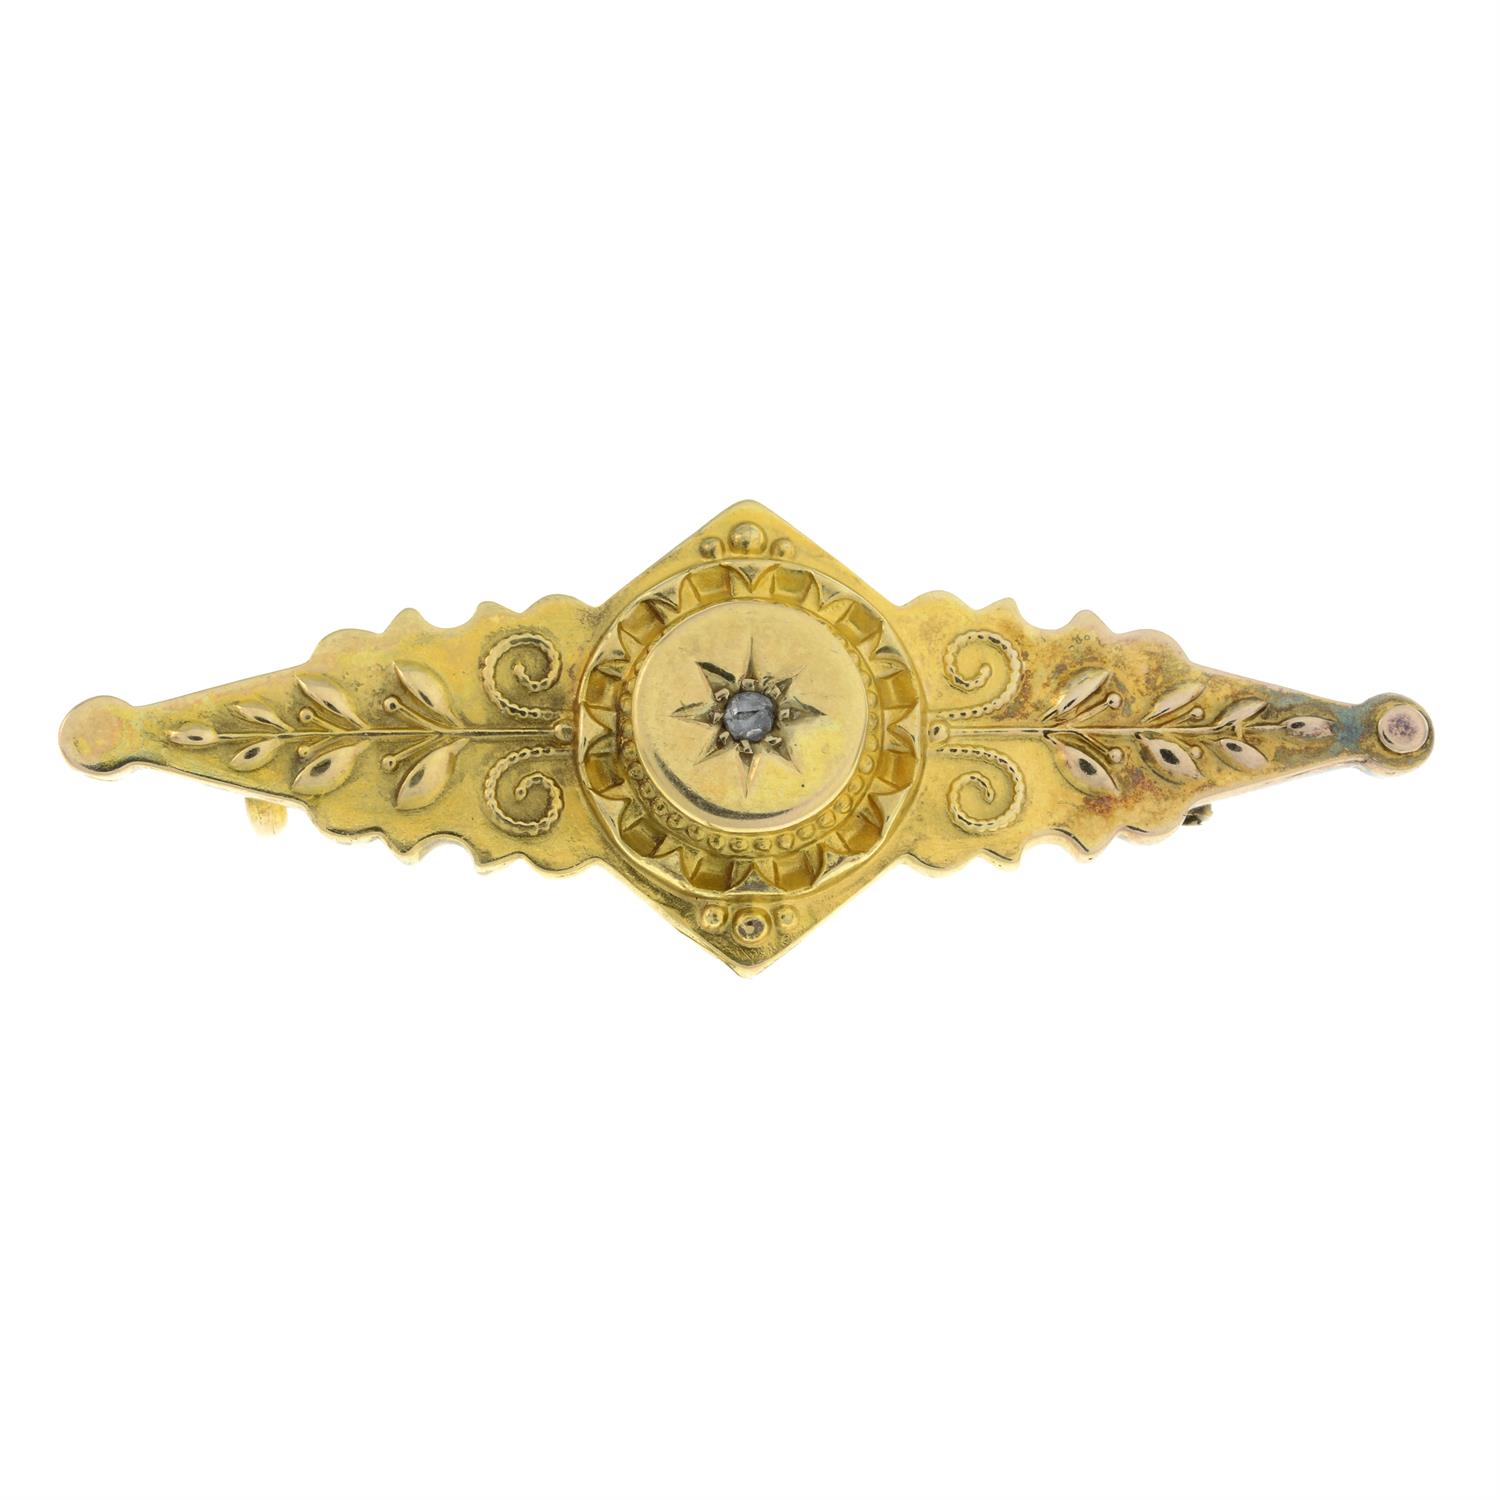 Early 20th century diamond brooch